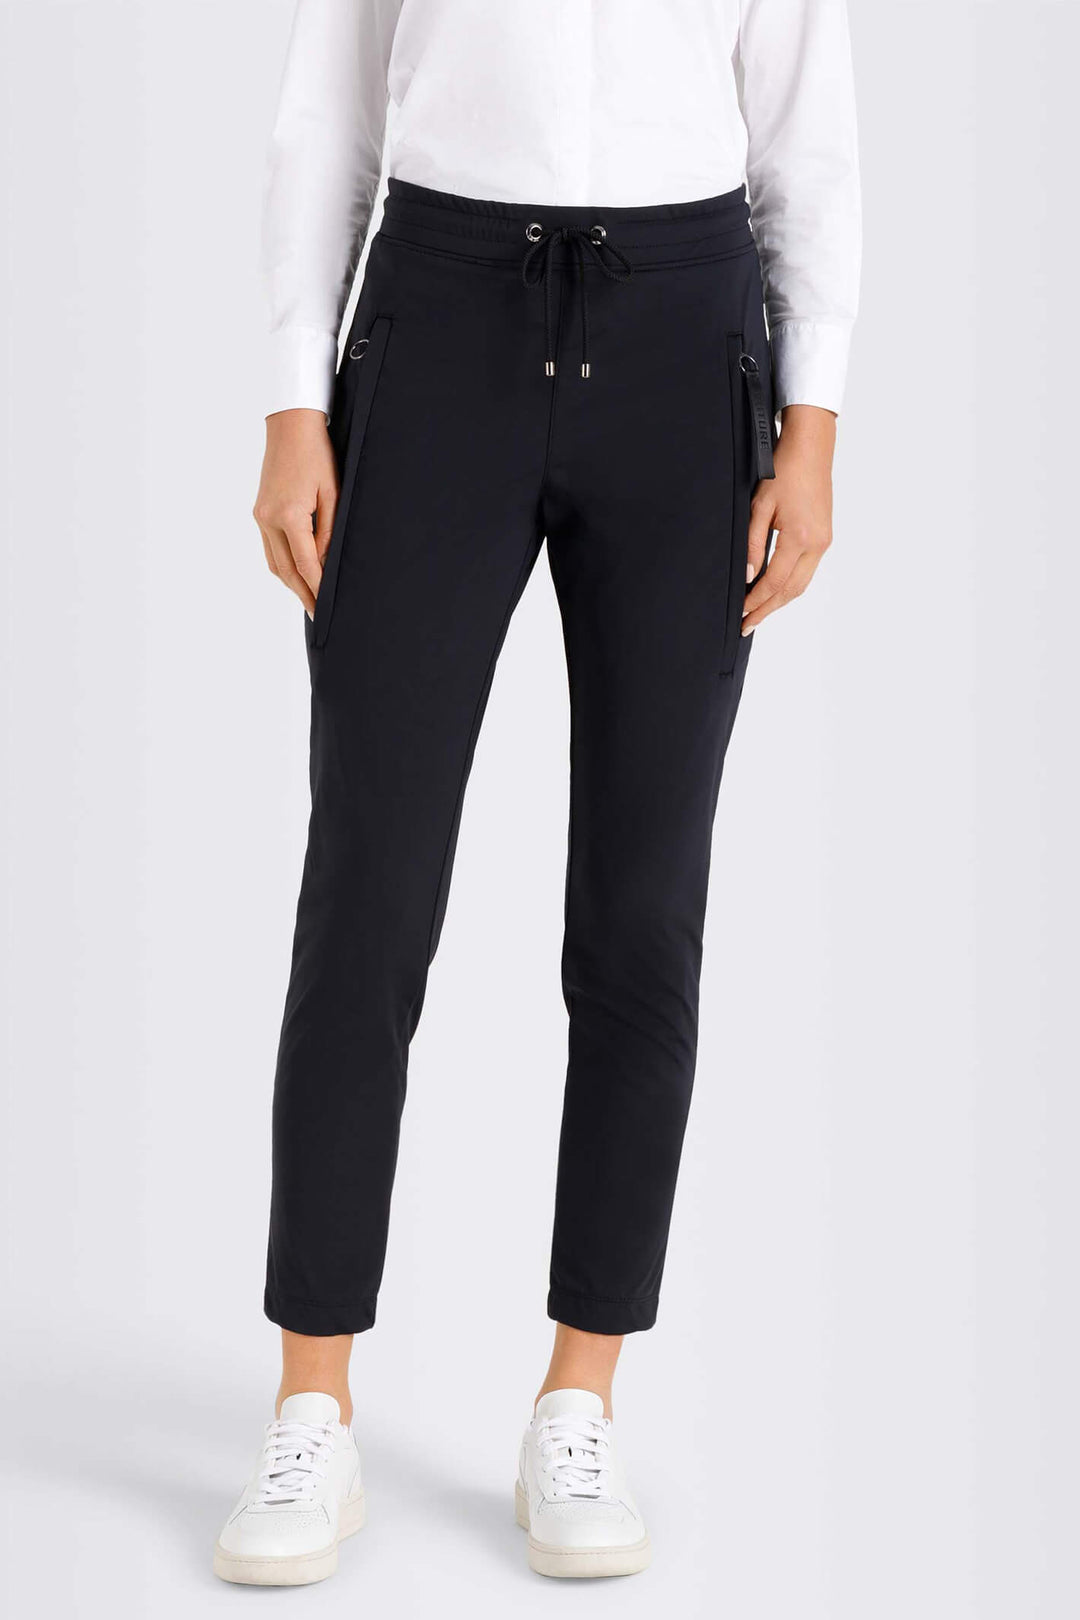 Mac Future 2713 00 0169L Black Premium Stretch Pull On Trousers - Olivia Grace Fashion